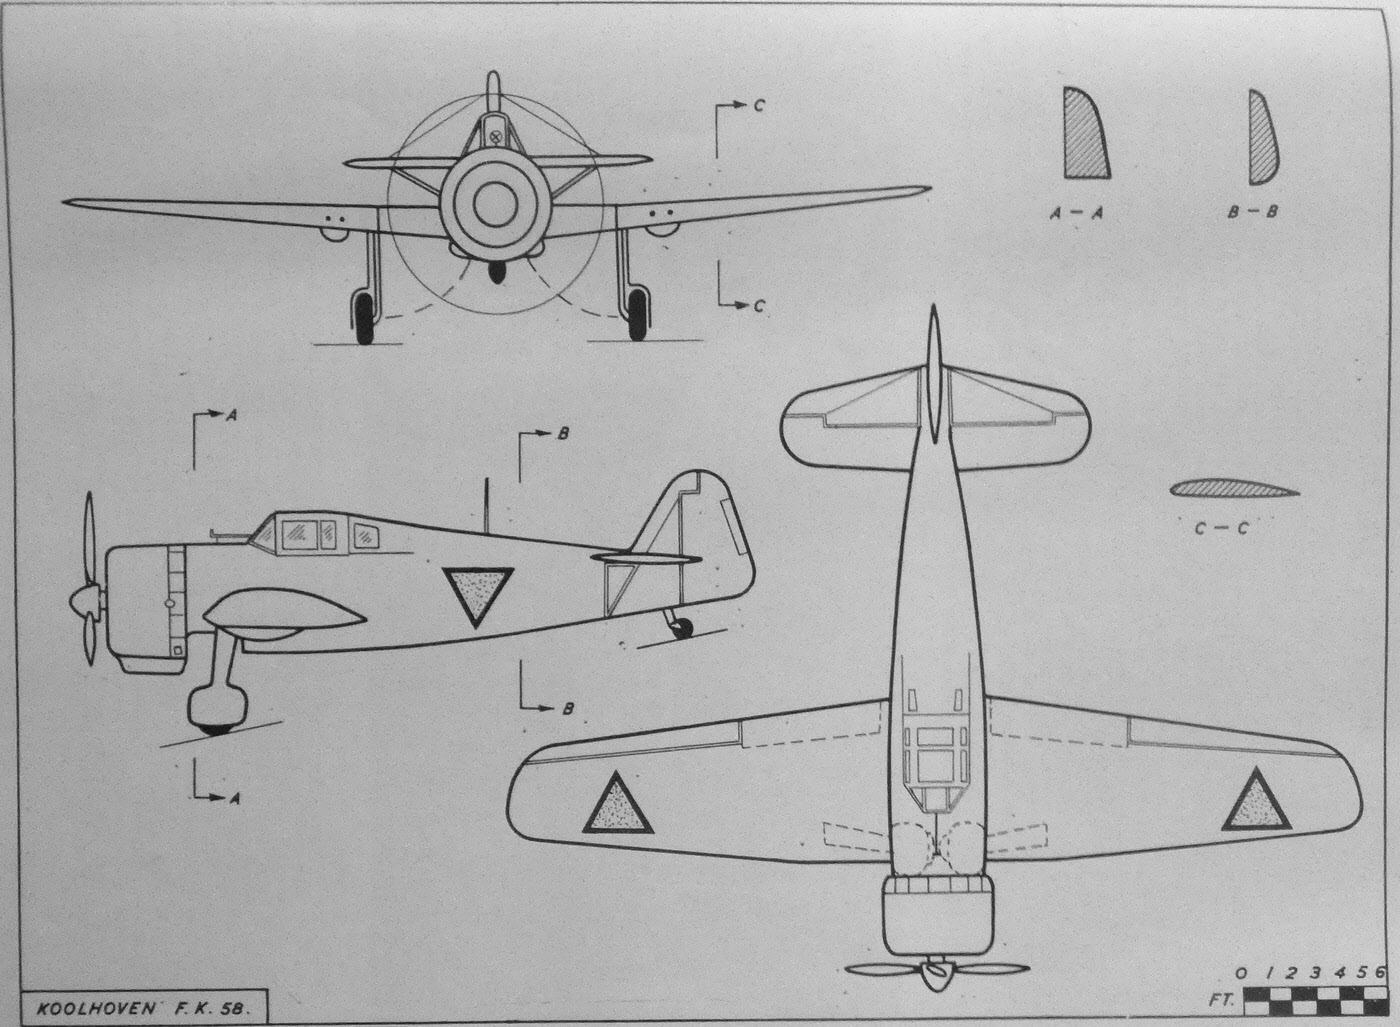 Plans of Koolhoven F.K.58 